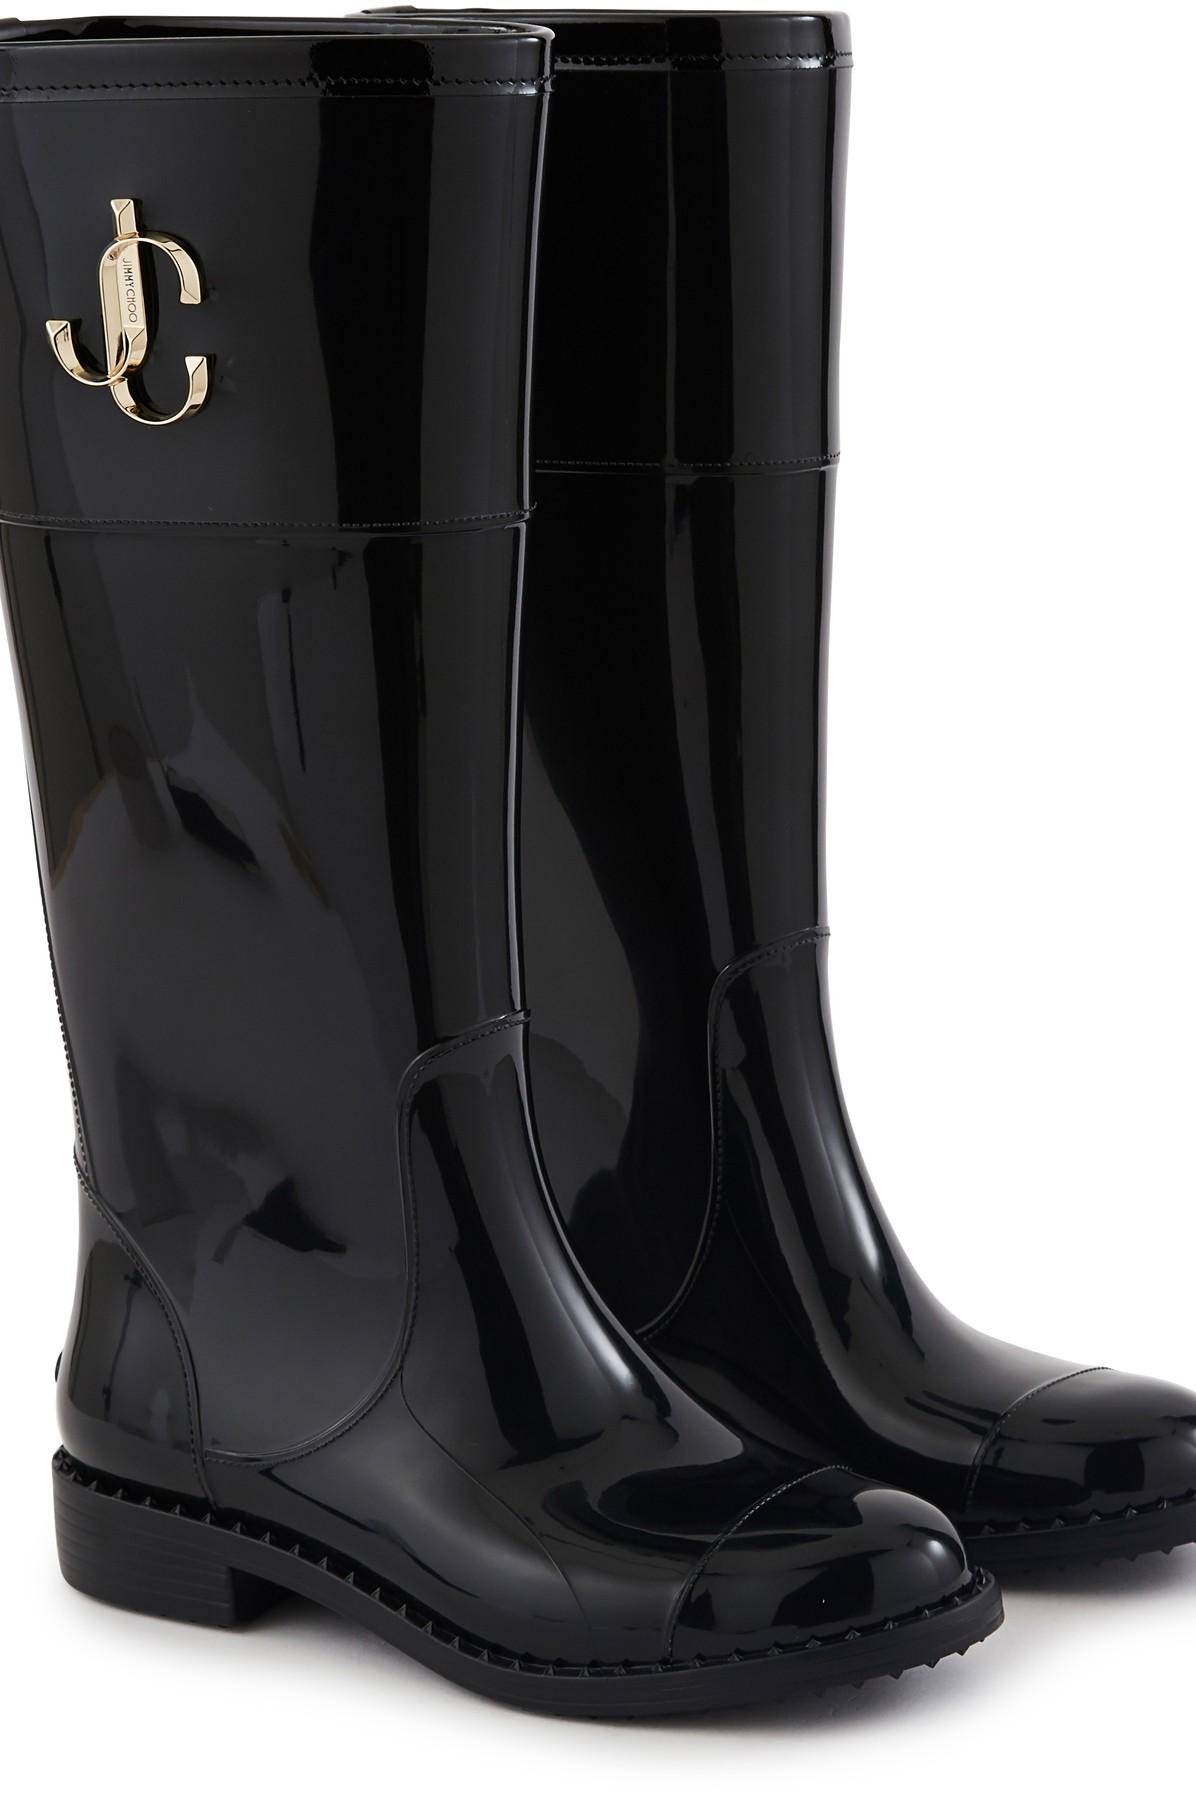 Jimmy Choo Leather Edith Jc Rain Boot in Black | Lyst